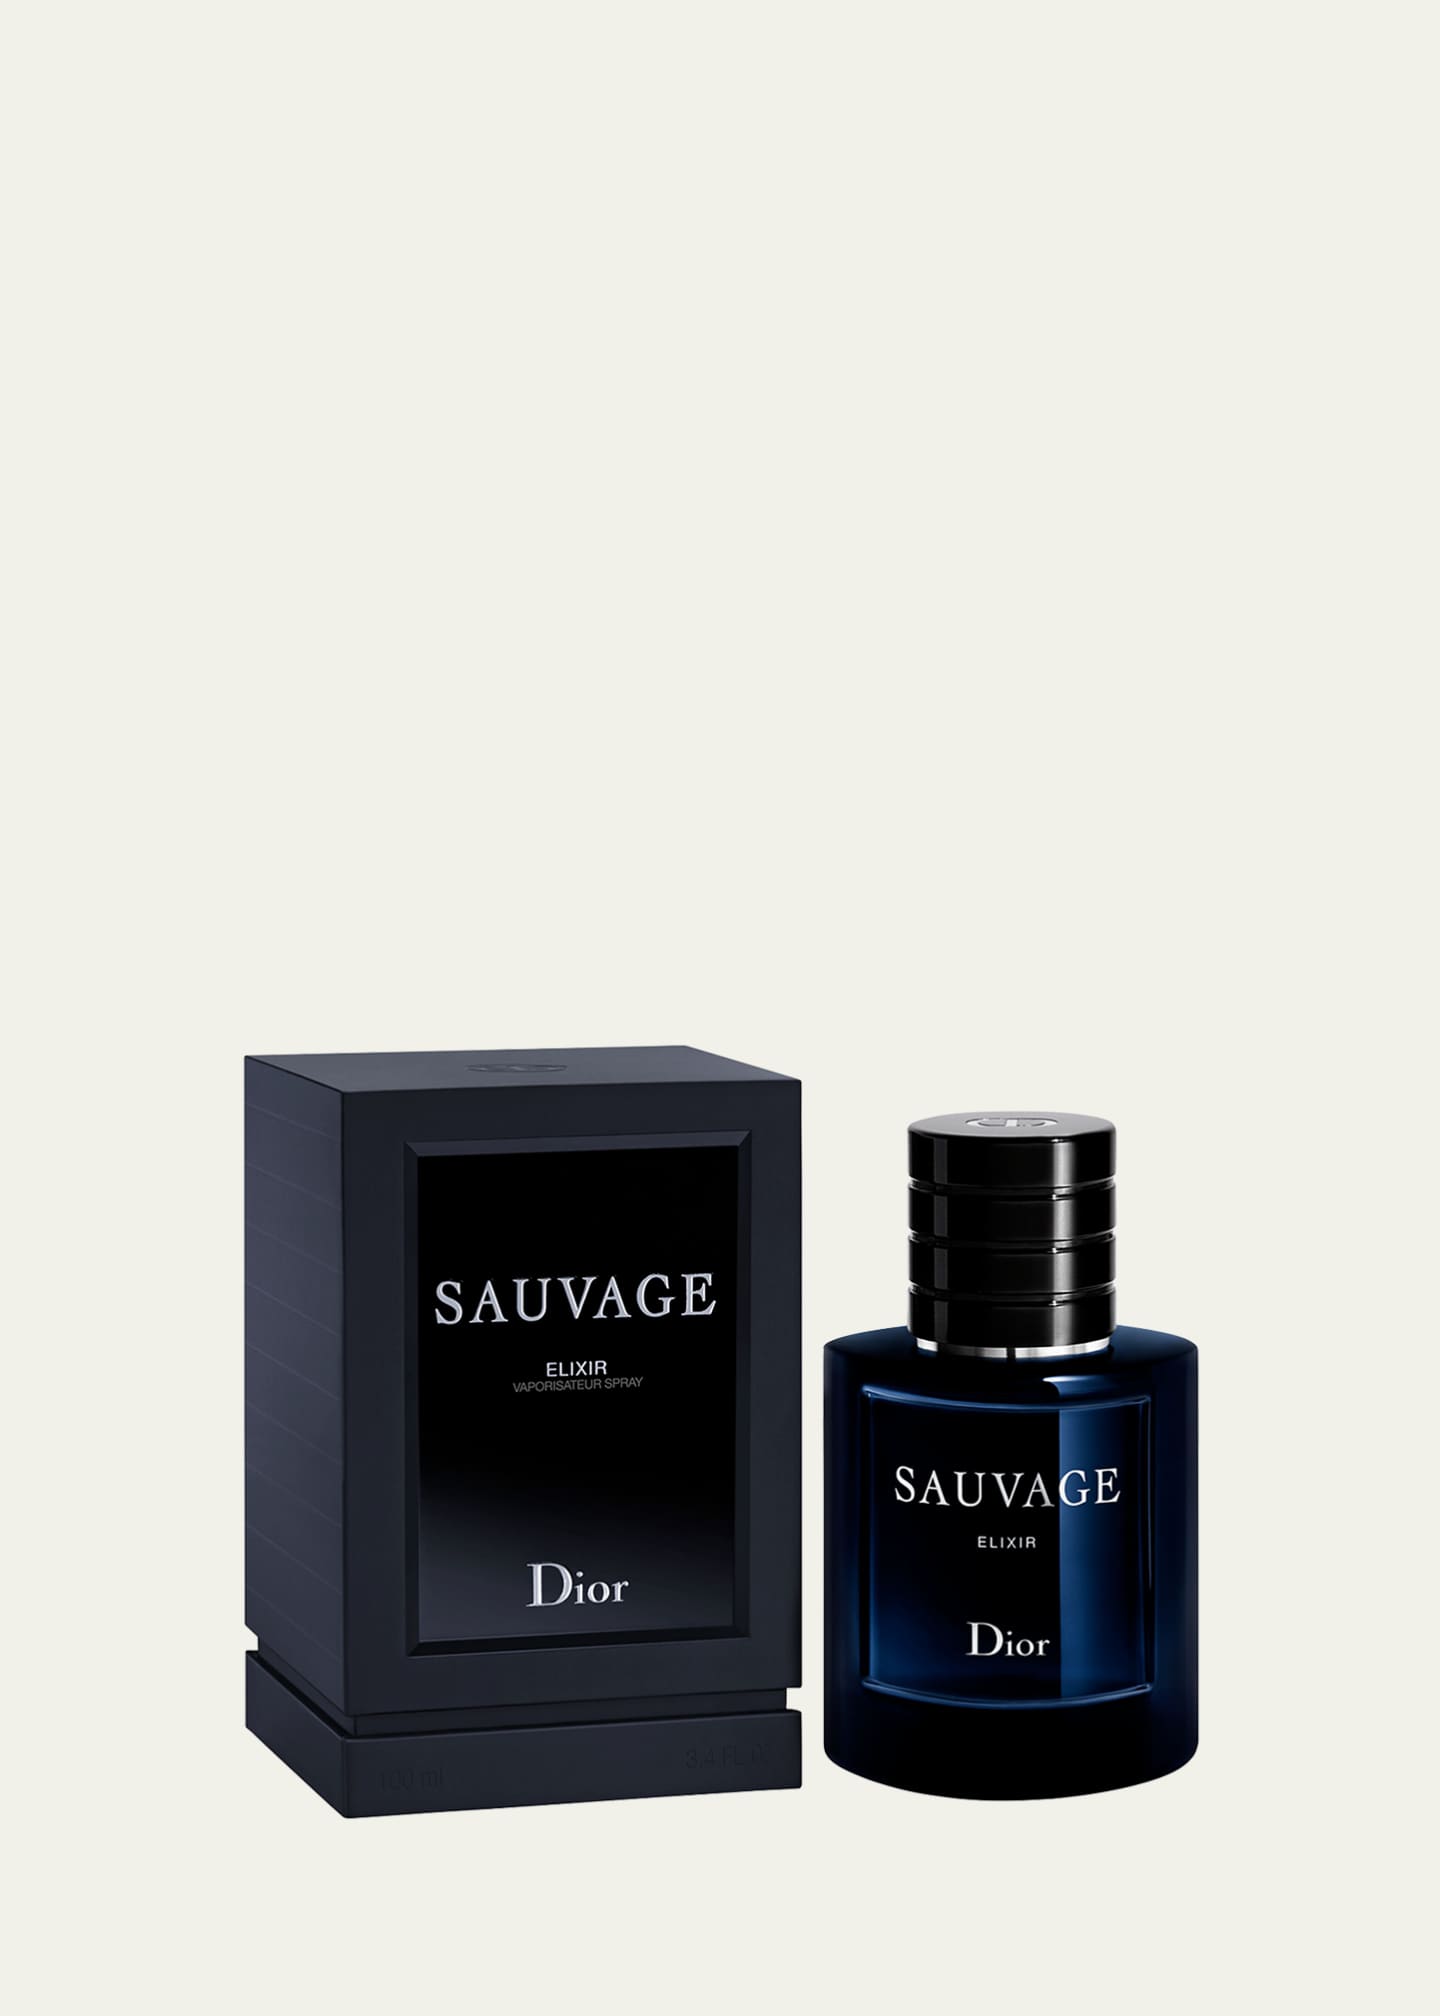 Sauvage Elixir by Christian Dior - Eau de Parfum Spray 2 oz